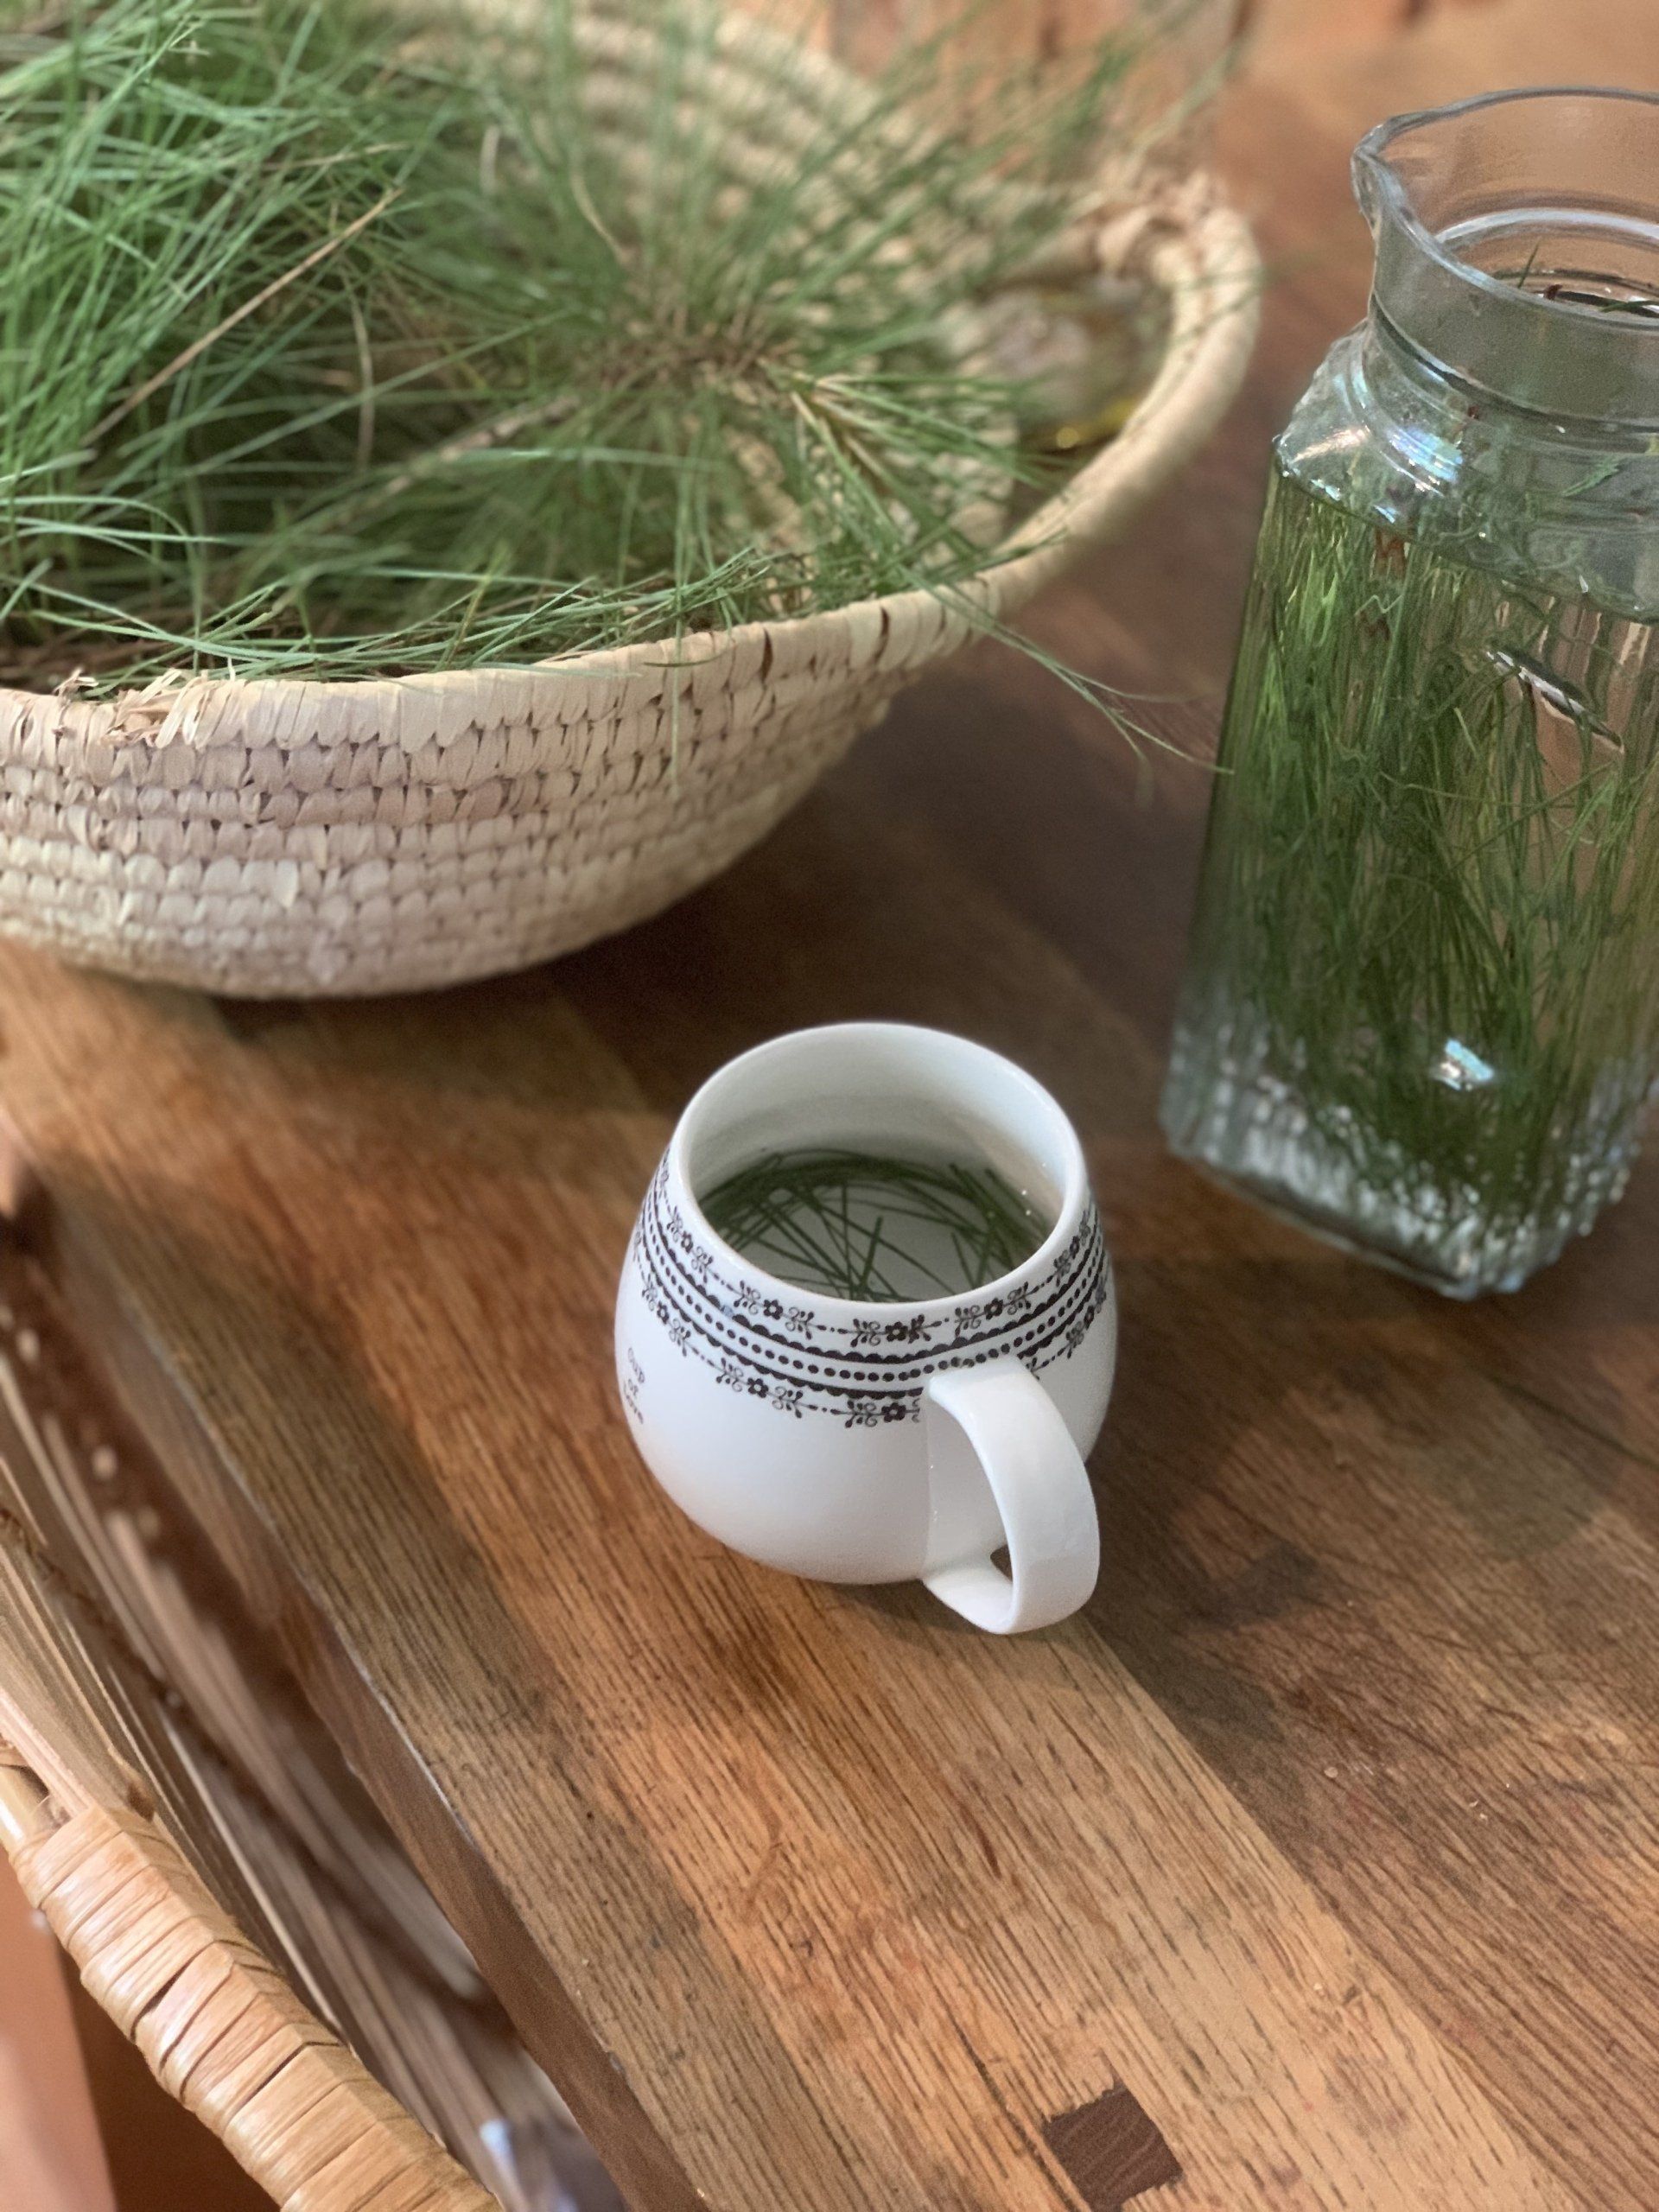 How to Make Pine Needle Tea Recipe by Stephanie Webb